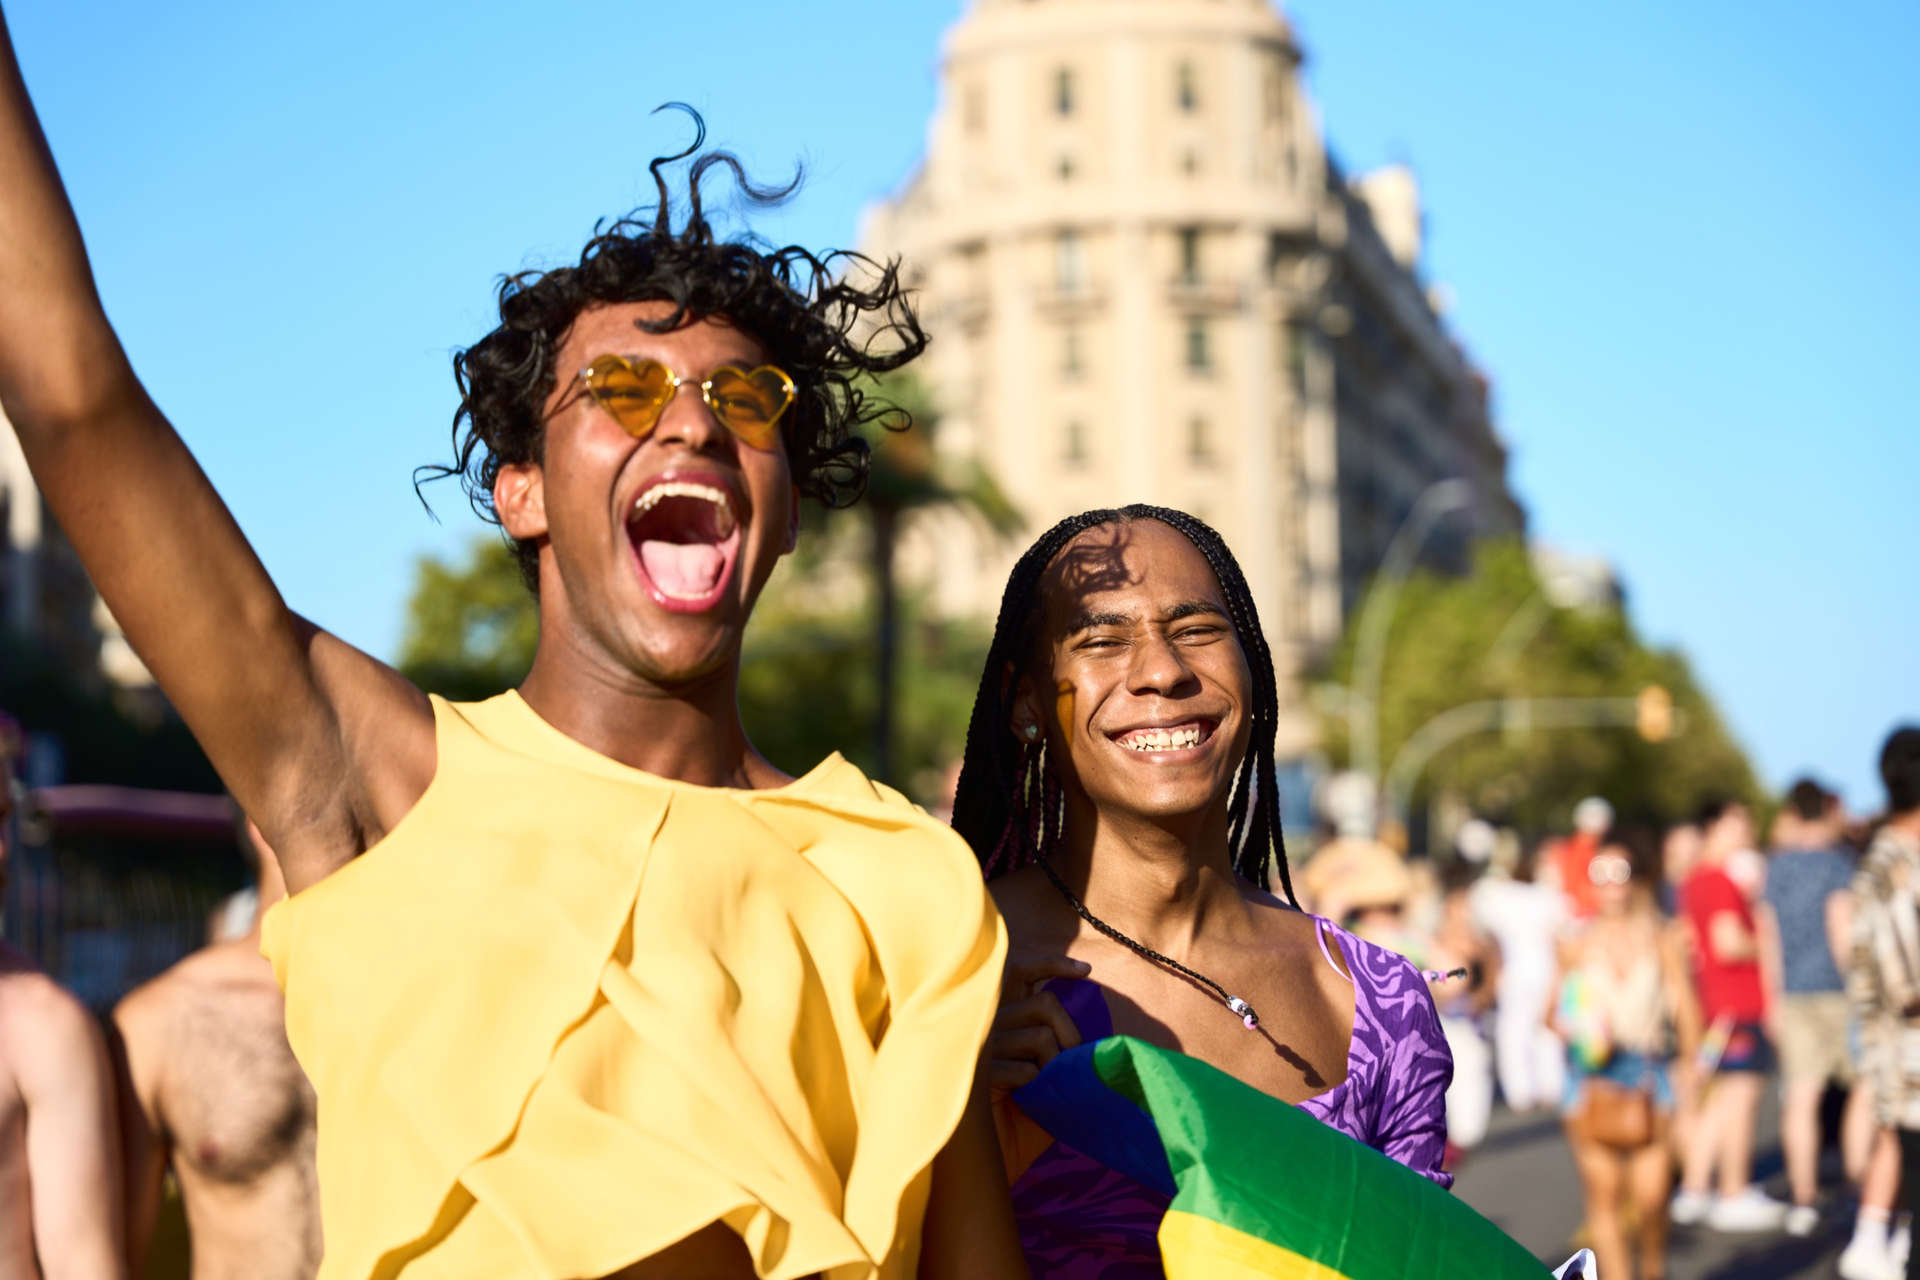 Two people celebrating Pride, Barcelona, Spain